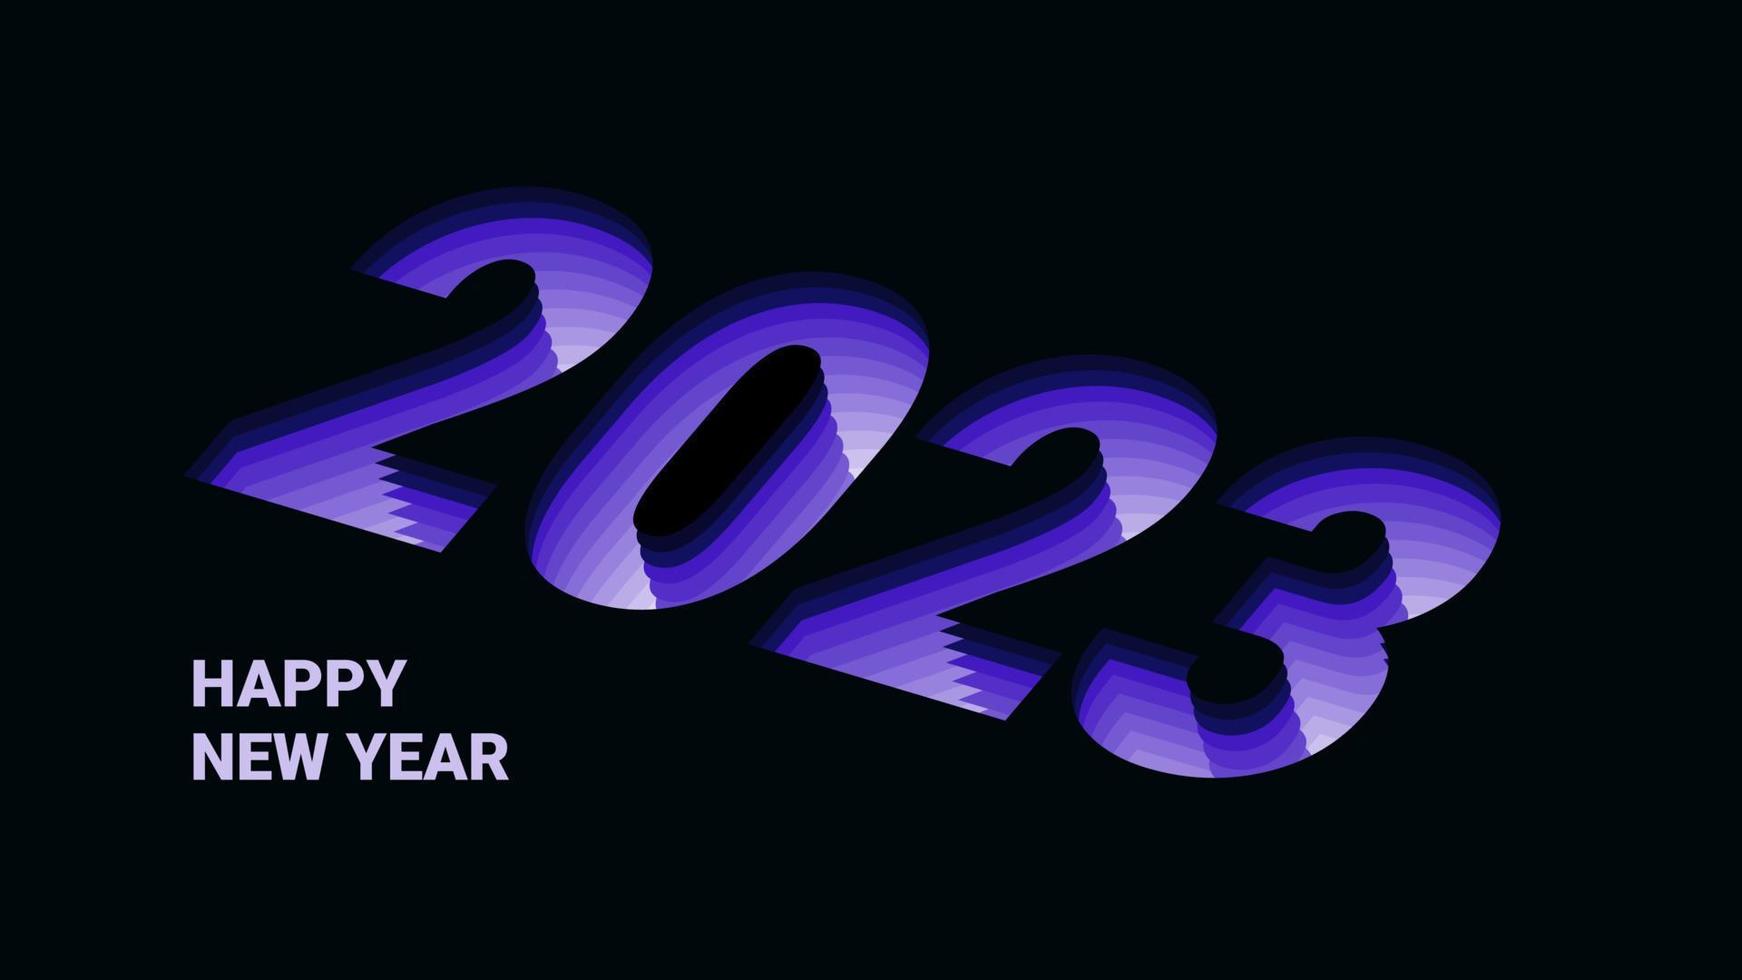 Happy new year 2023 futuristic infinity mirror design vector